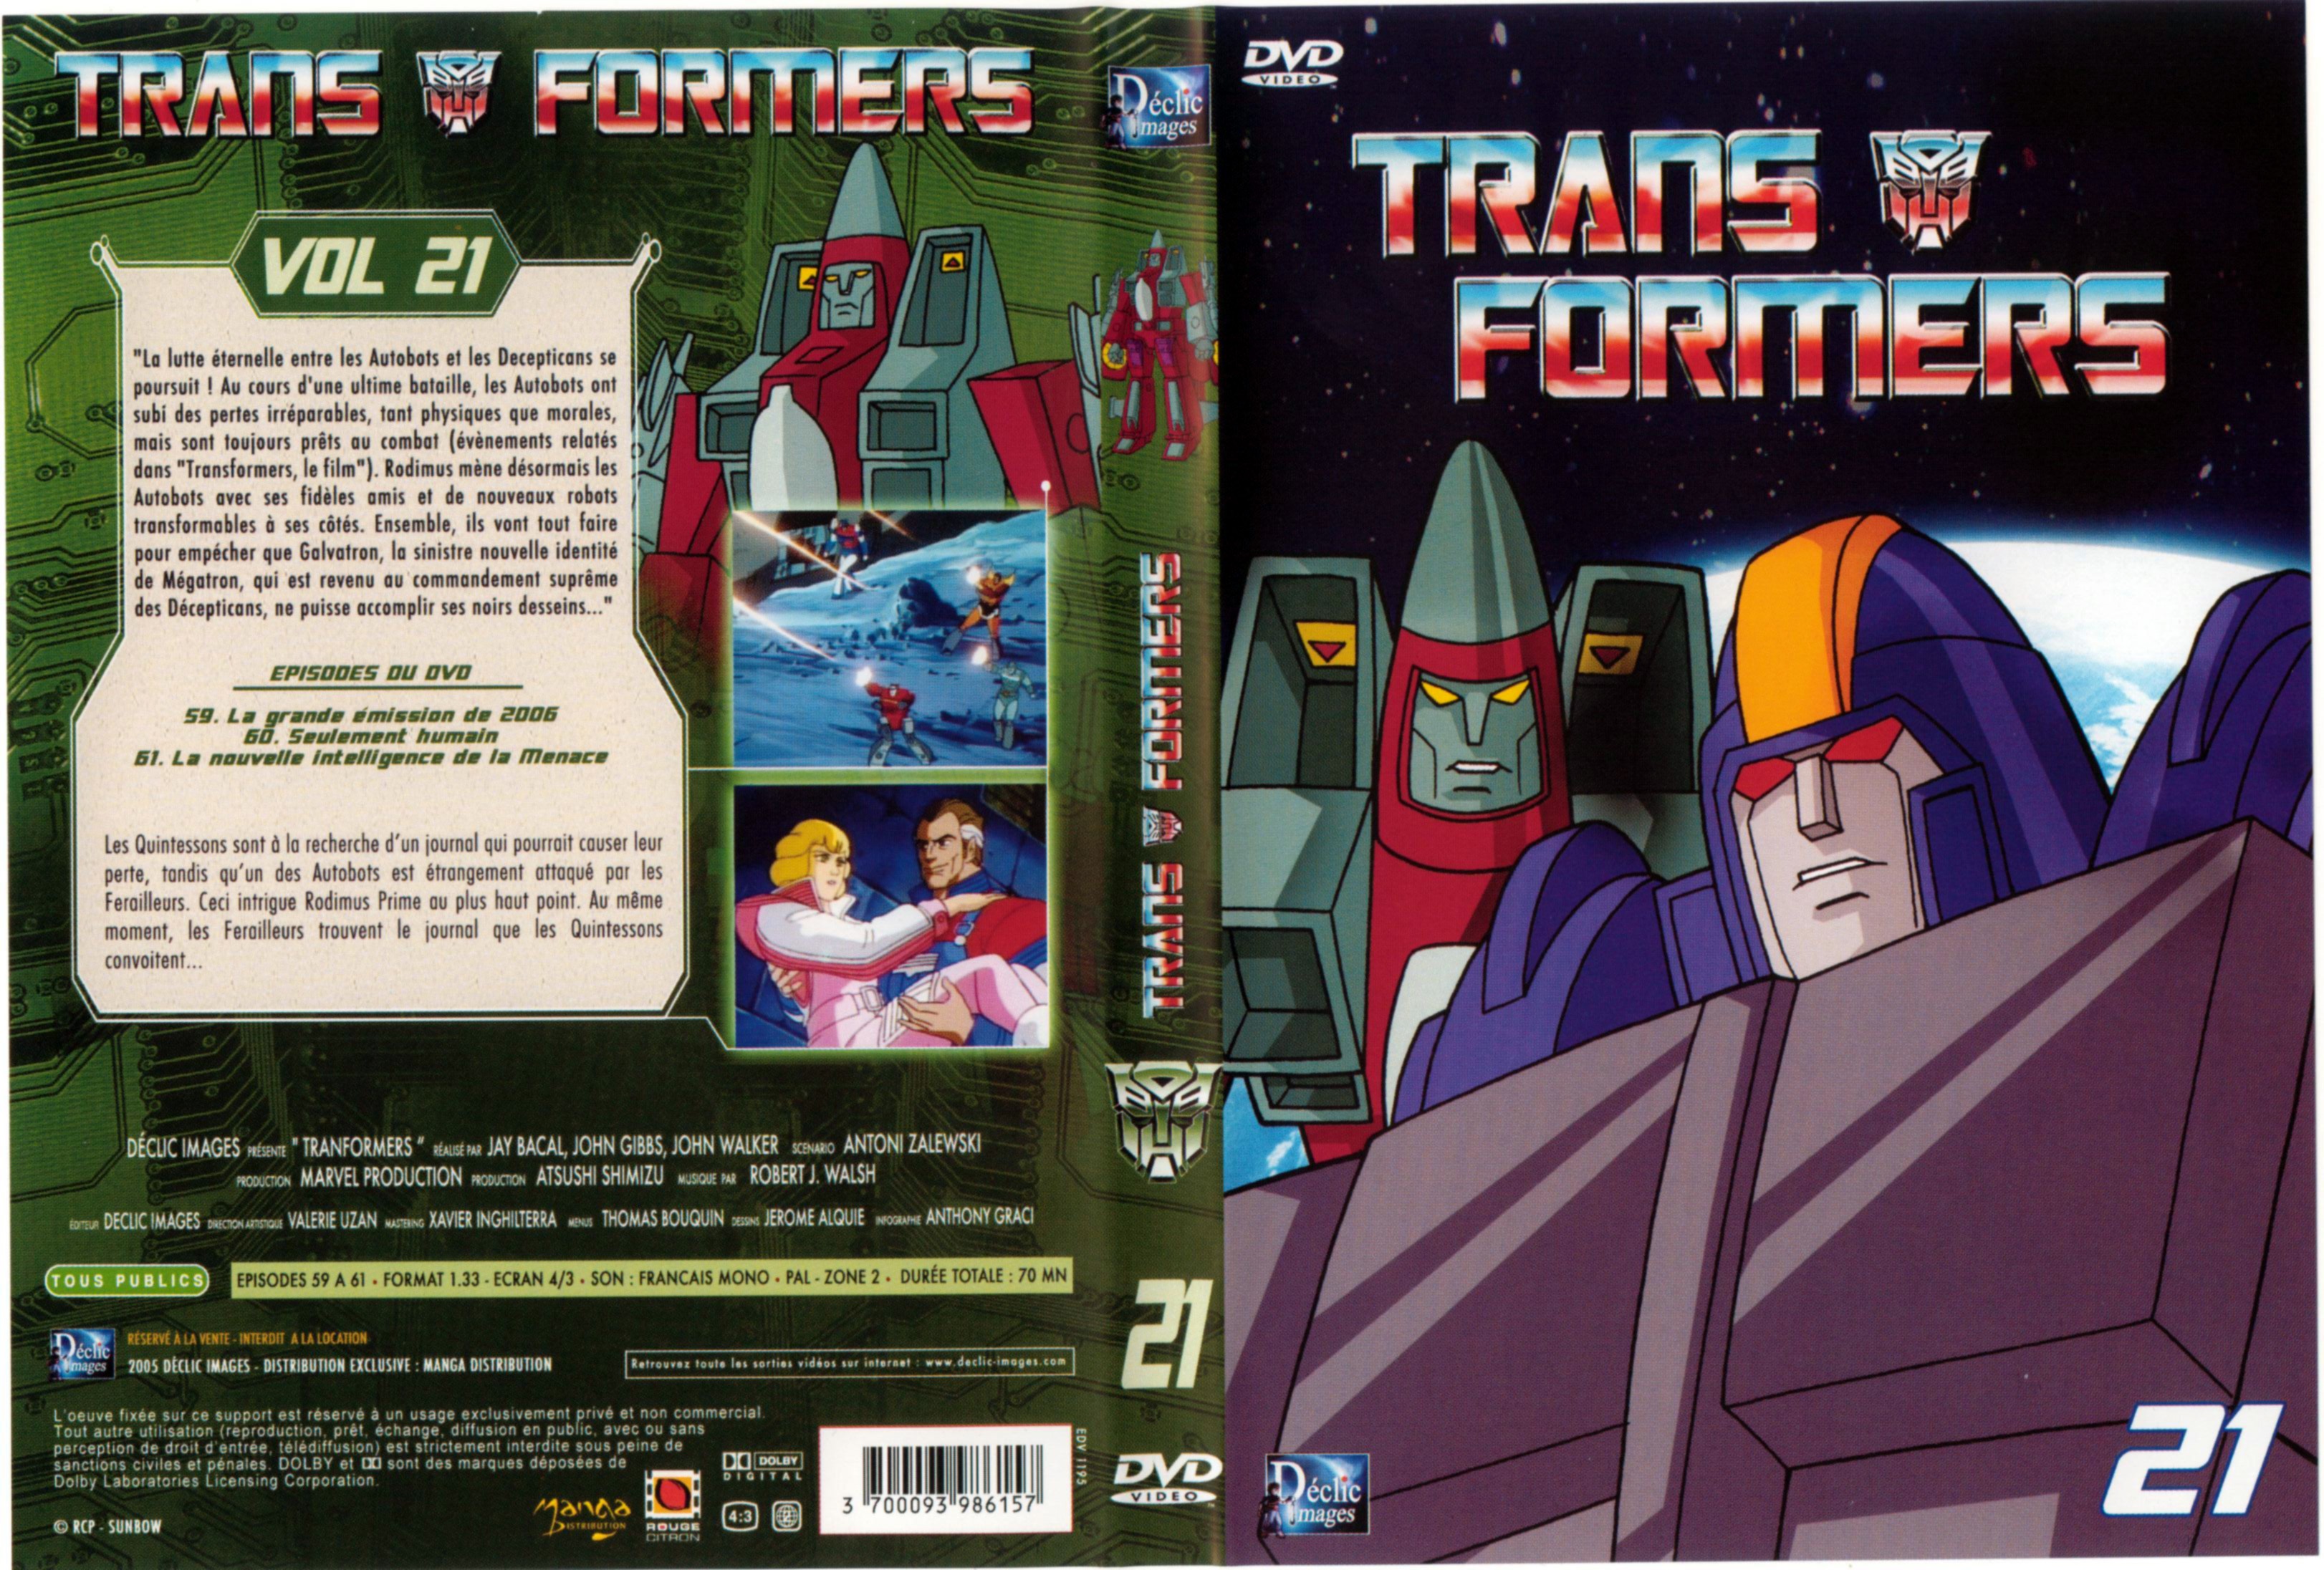 Jaquette DVD Transformers vol 21